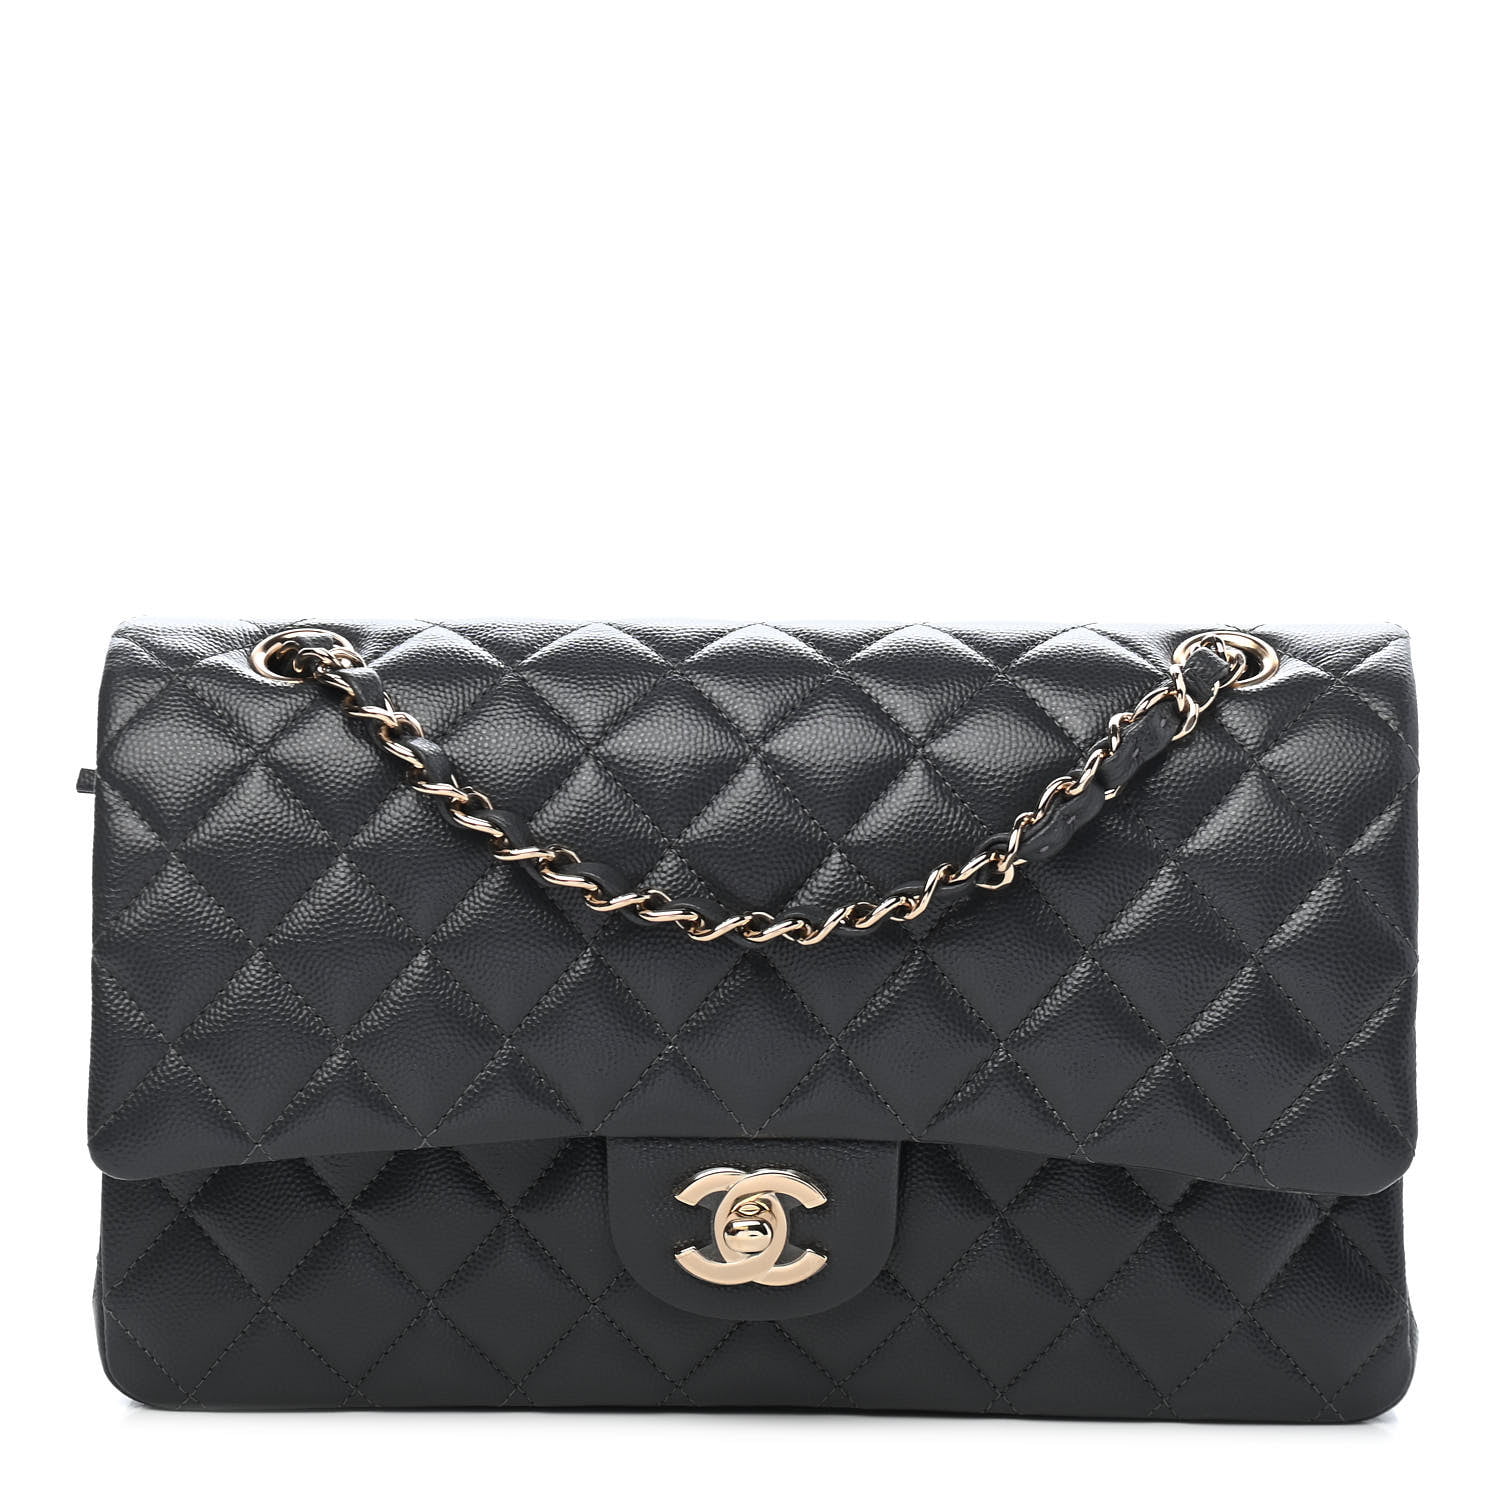 Chanel Strikes Gold: The Chanel 23P Caviar Classic Flap - PurseBop